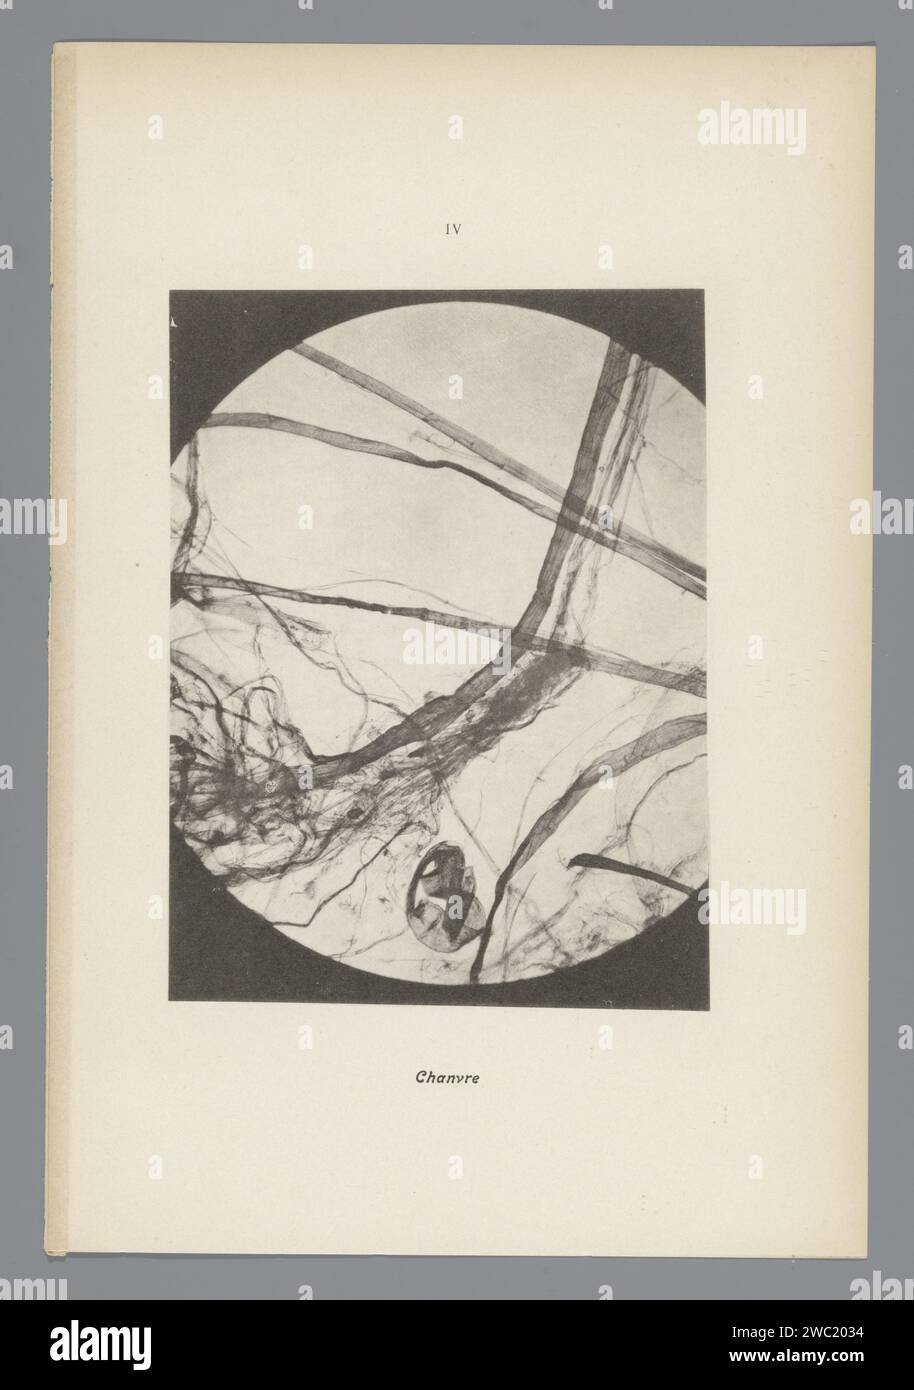 IV Chanvre, Anonym, 1900 Fotomaterial aus Précis Historique. Frankreich Papier. Farbkollotyp Stockfoto